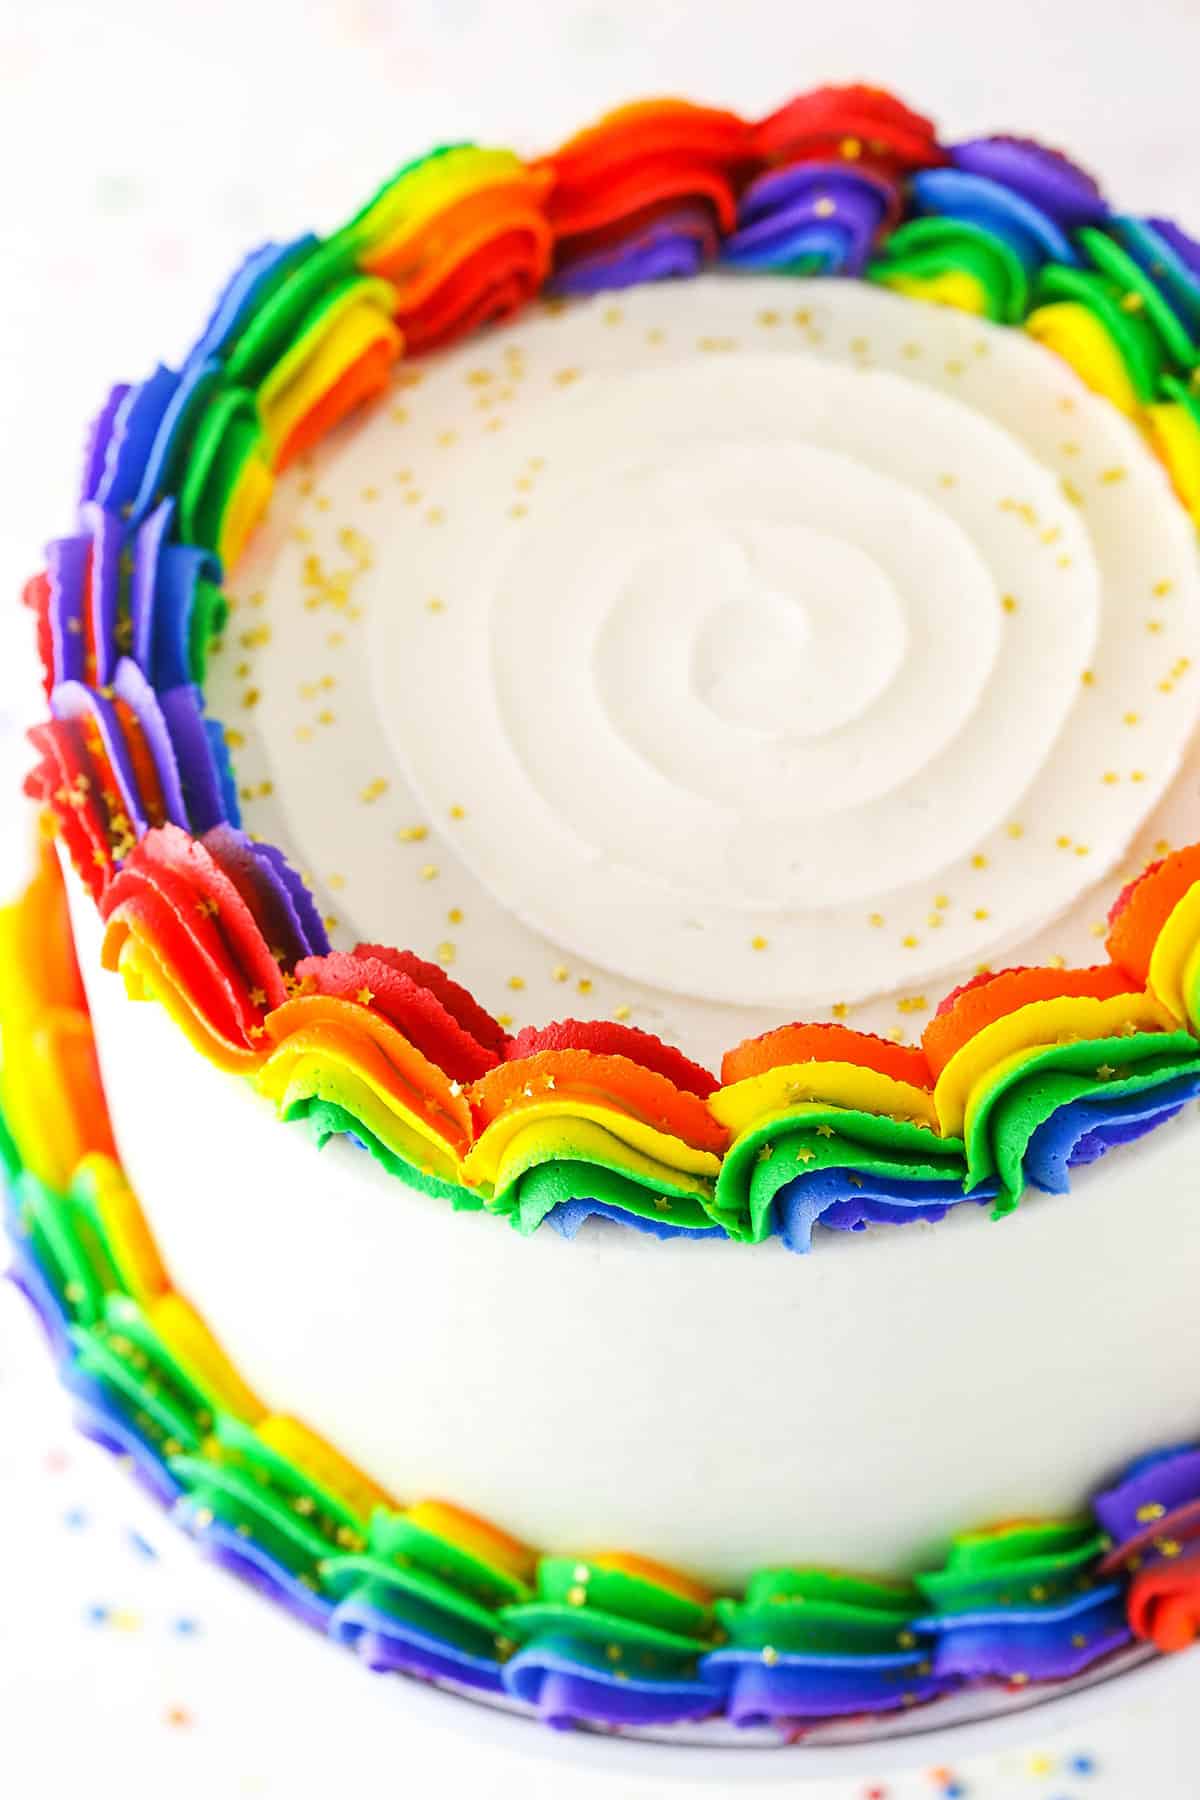 Overhead view of a full Rainbow Swirl Cake